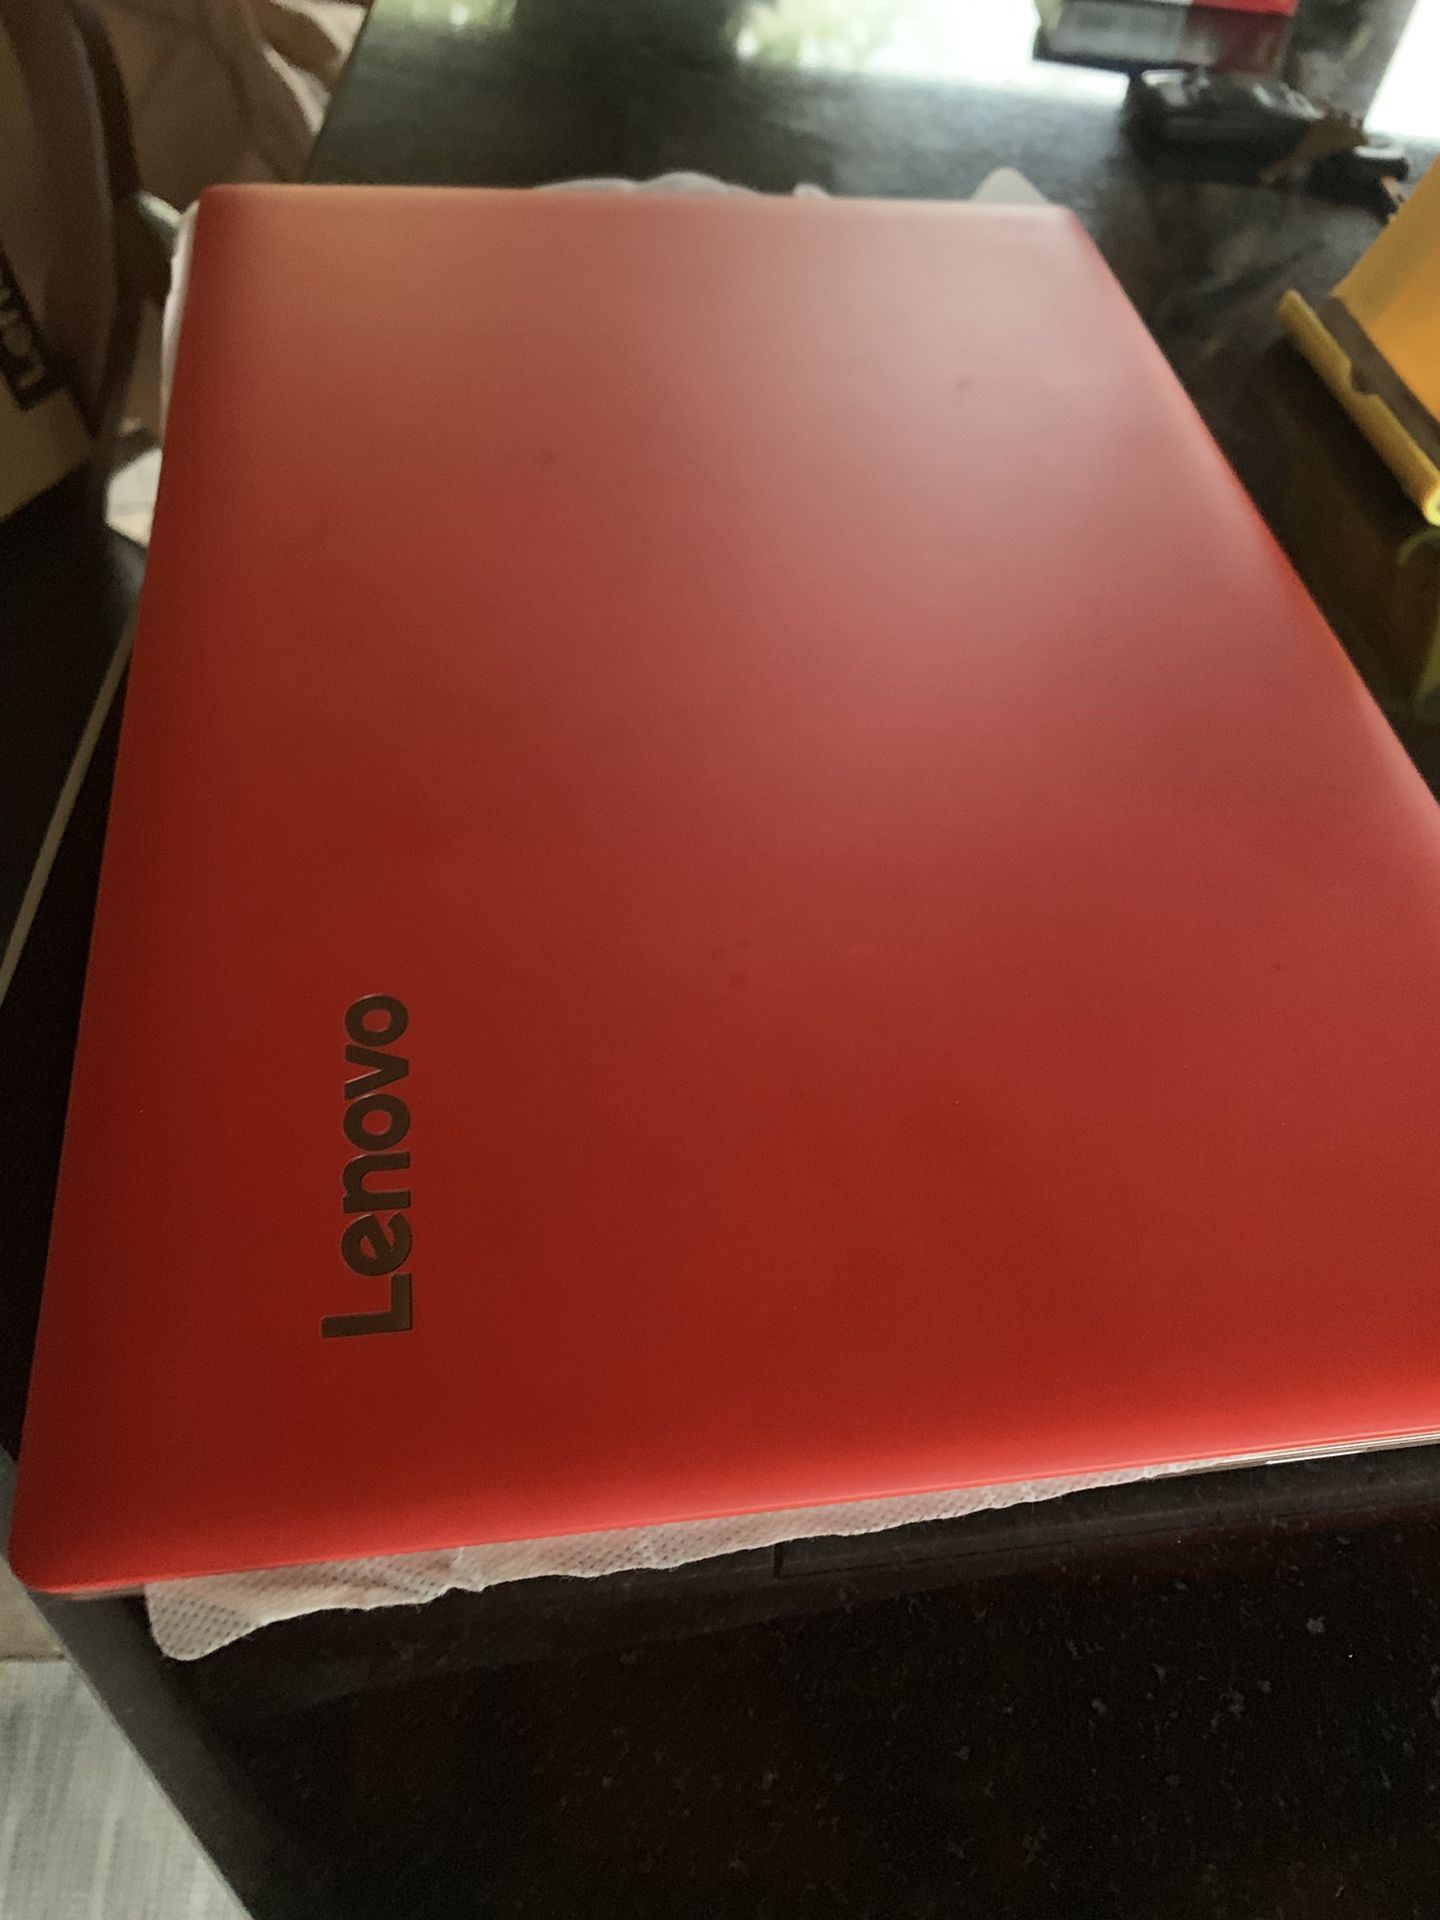 Lenovo laptop new $260